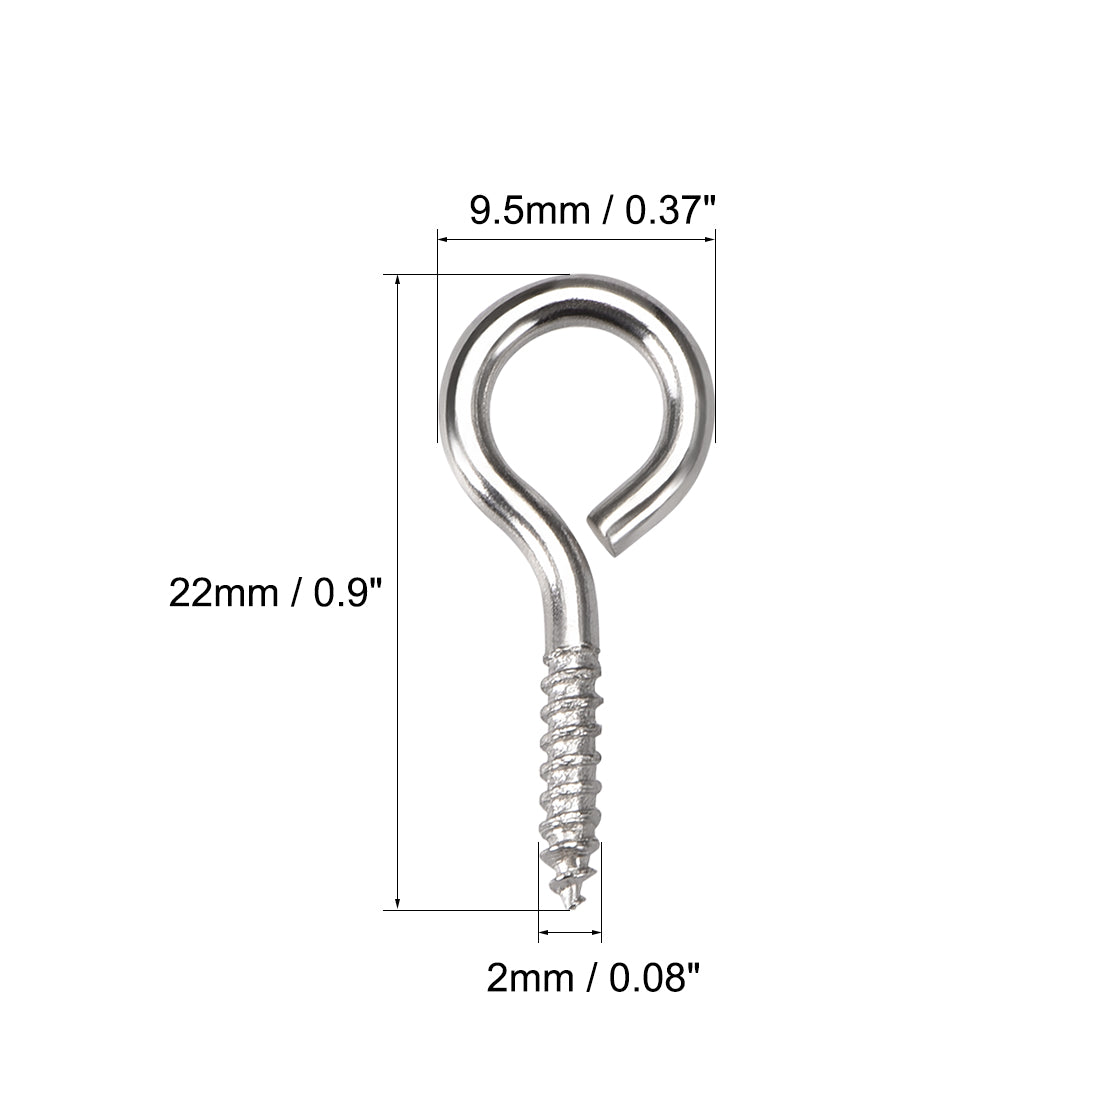 uxcell Uxcell 0.9" Small Screw Eye Hooks Self Tapping Screws Carbon Steel Screw-in Hanger Eye-Shape Ring Hooks Silver 50pcs